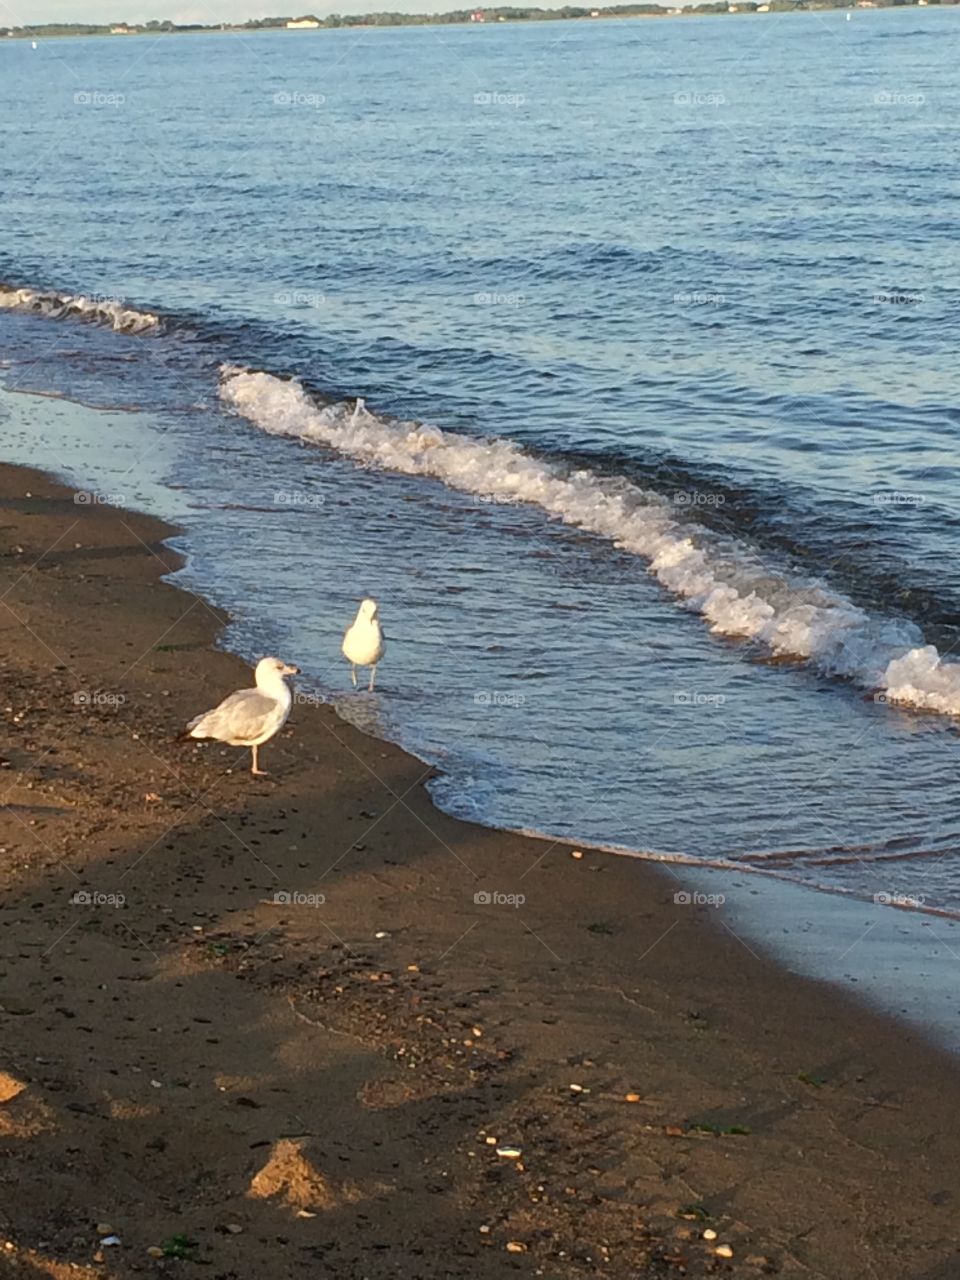 Gulls on the bay